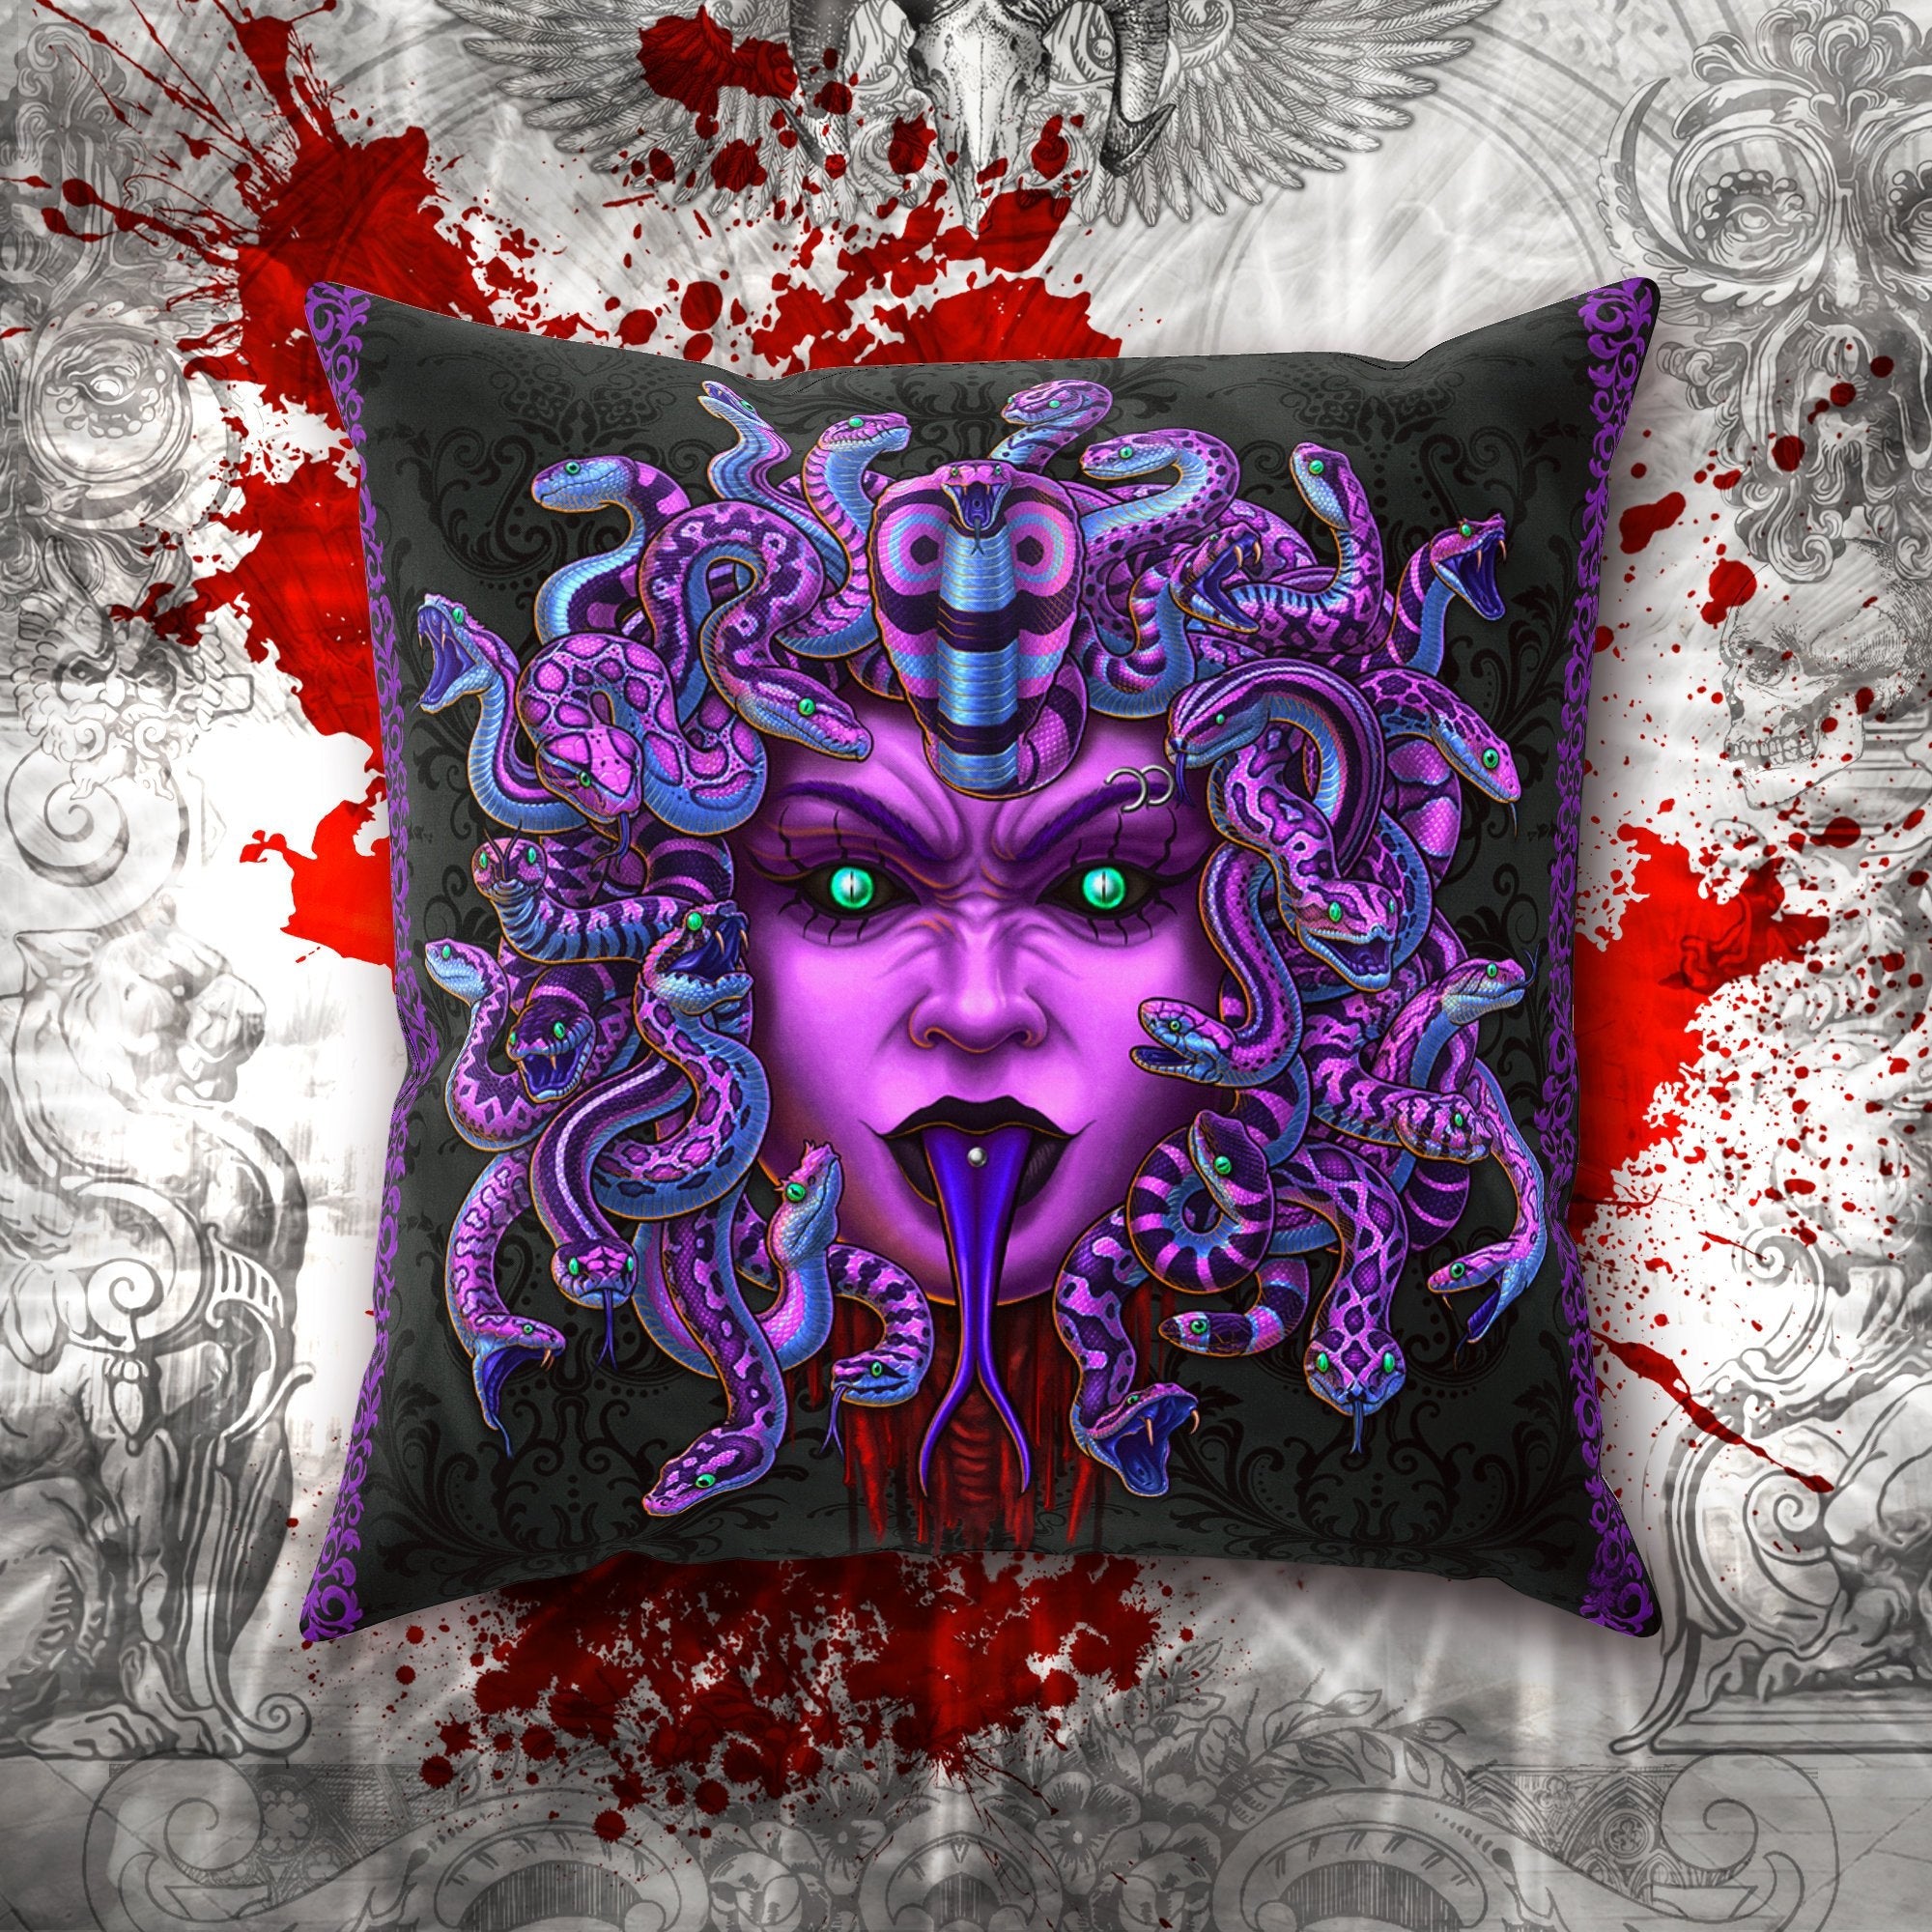 Pastel Goth Throw Pillow, Decorative Accent Cushion, Medusa, Gothic Room Decor, Psy Art, Alternative Home - Purple & Snakes - Abysm Internal